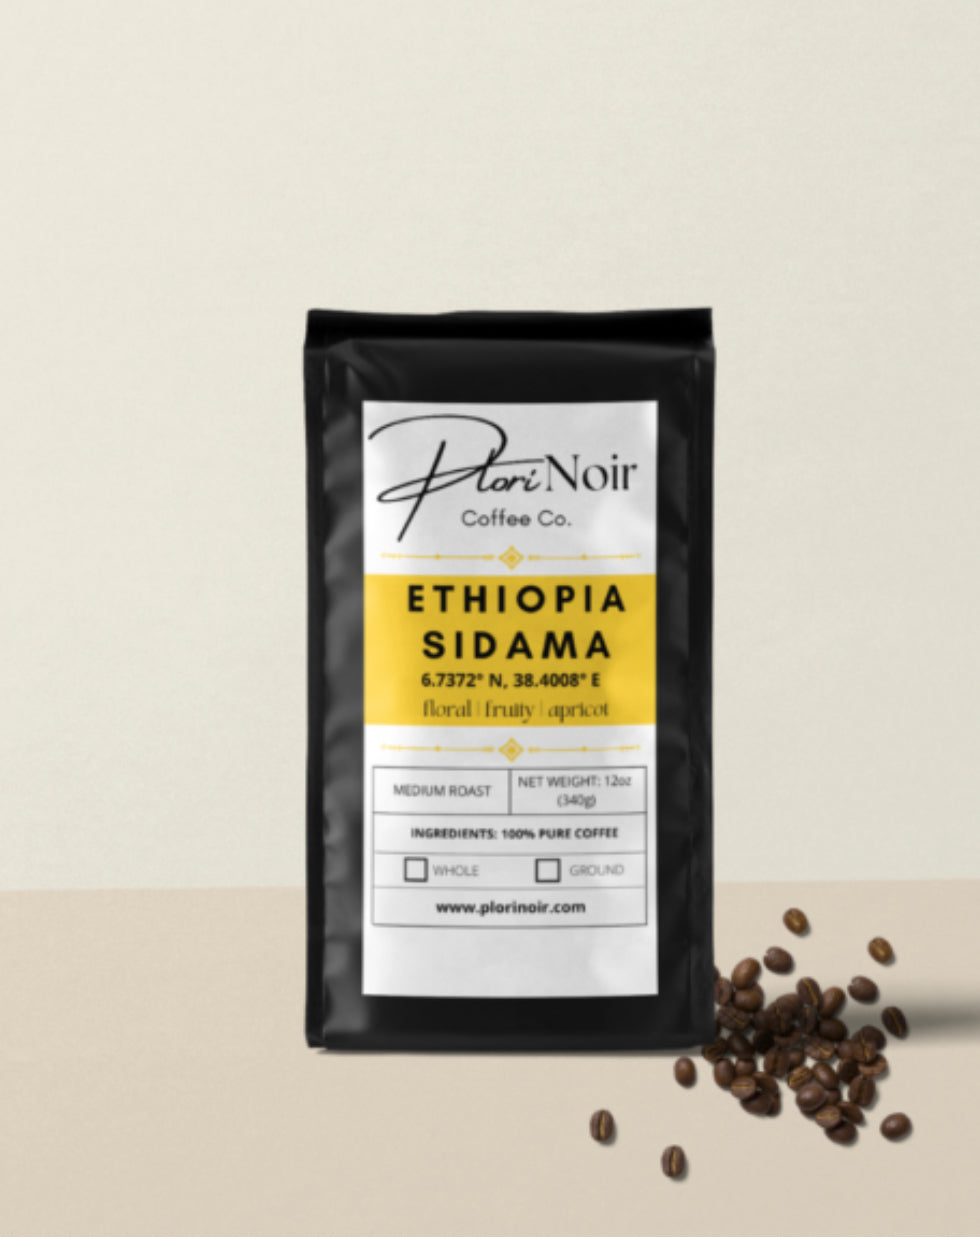 Ethopia Sidama coffee by Plori Noir